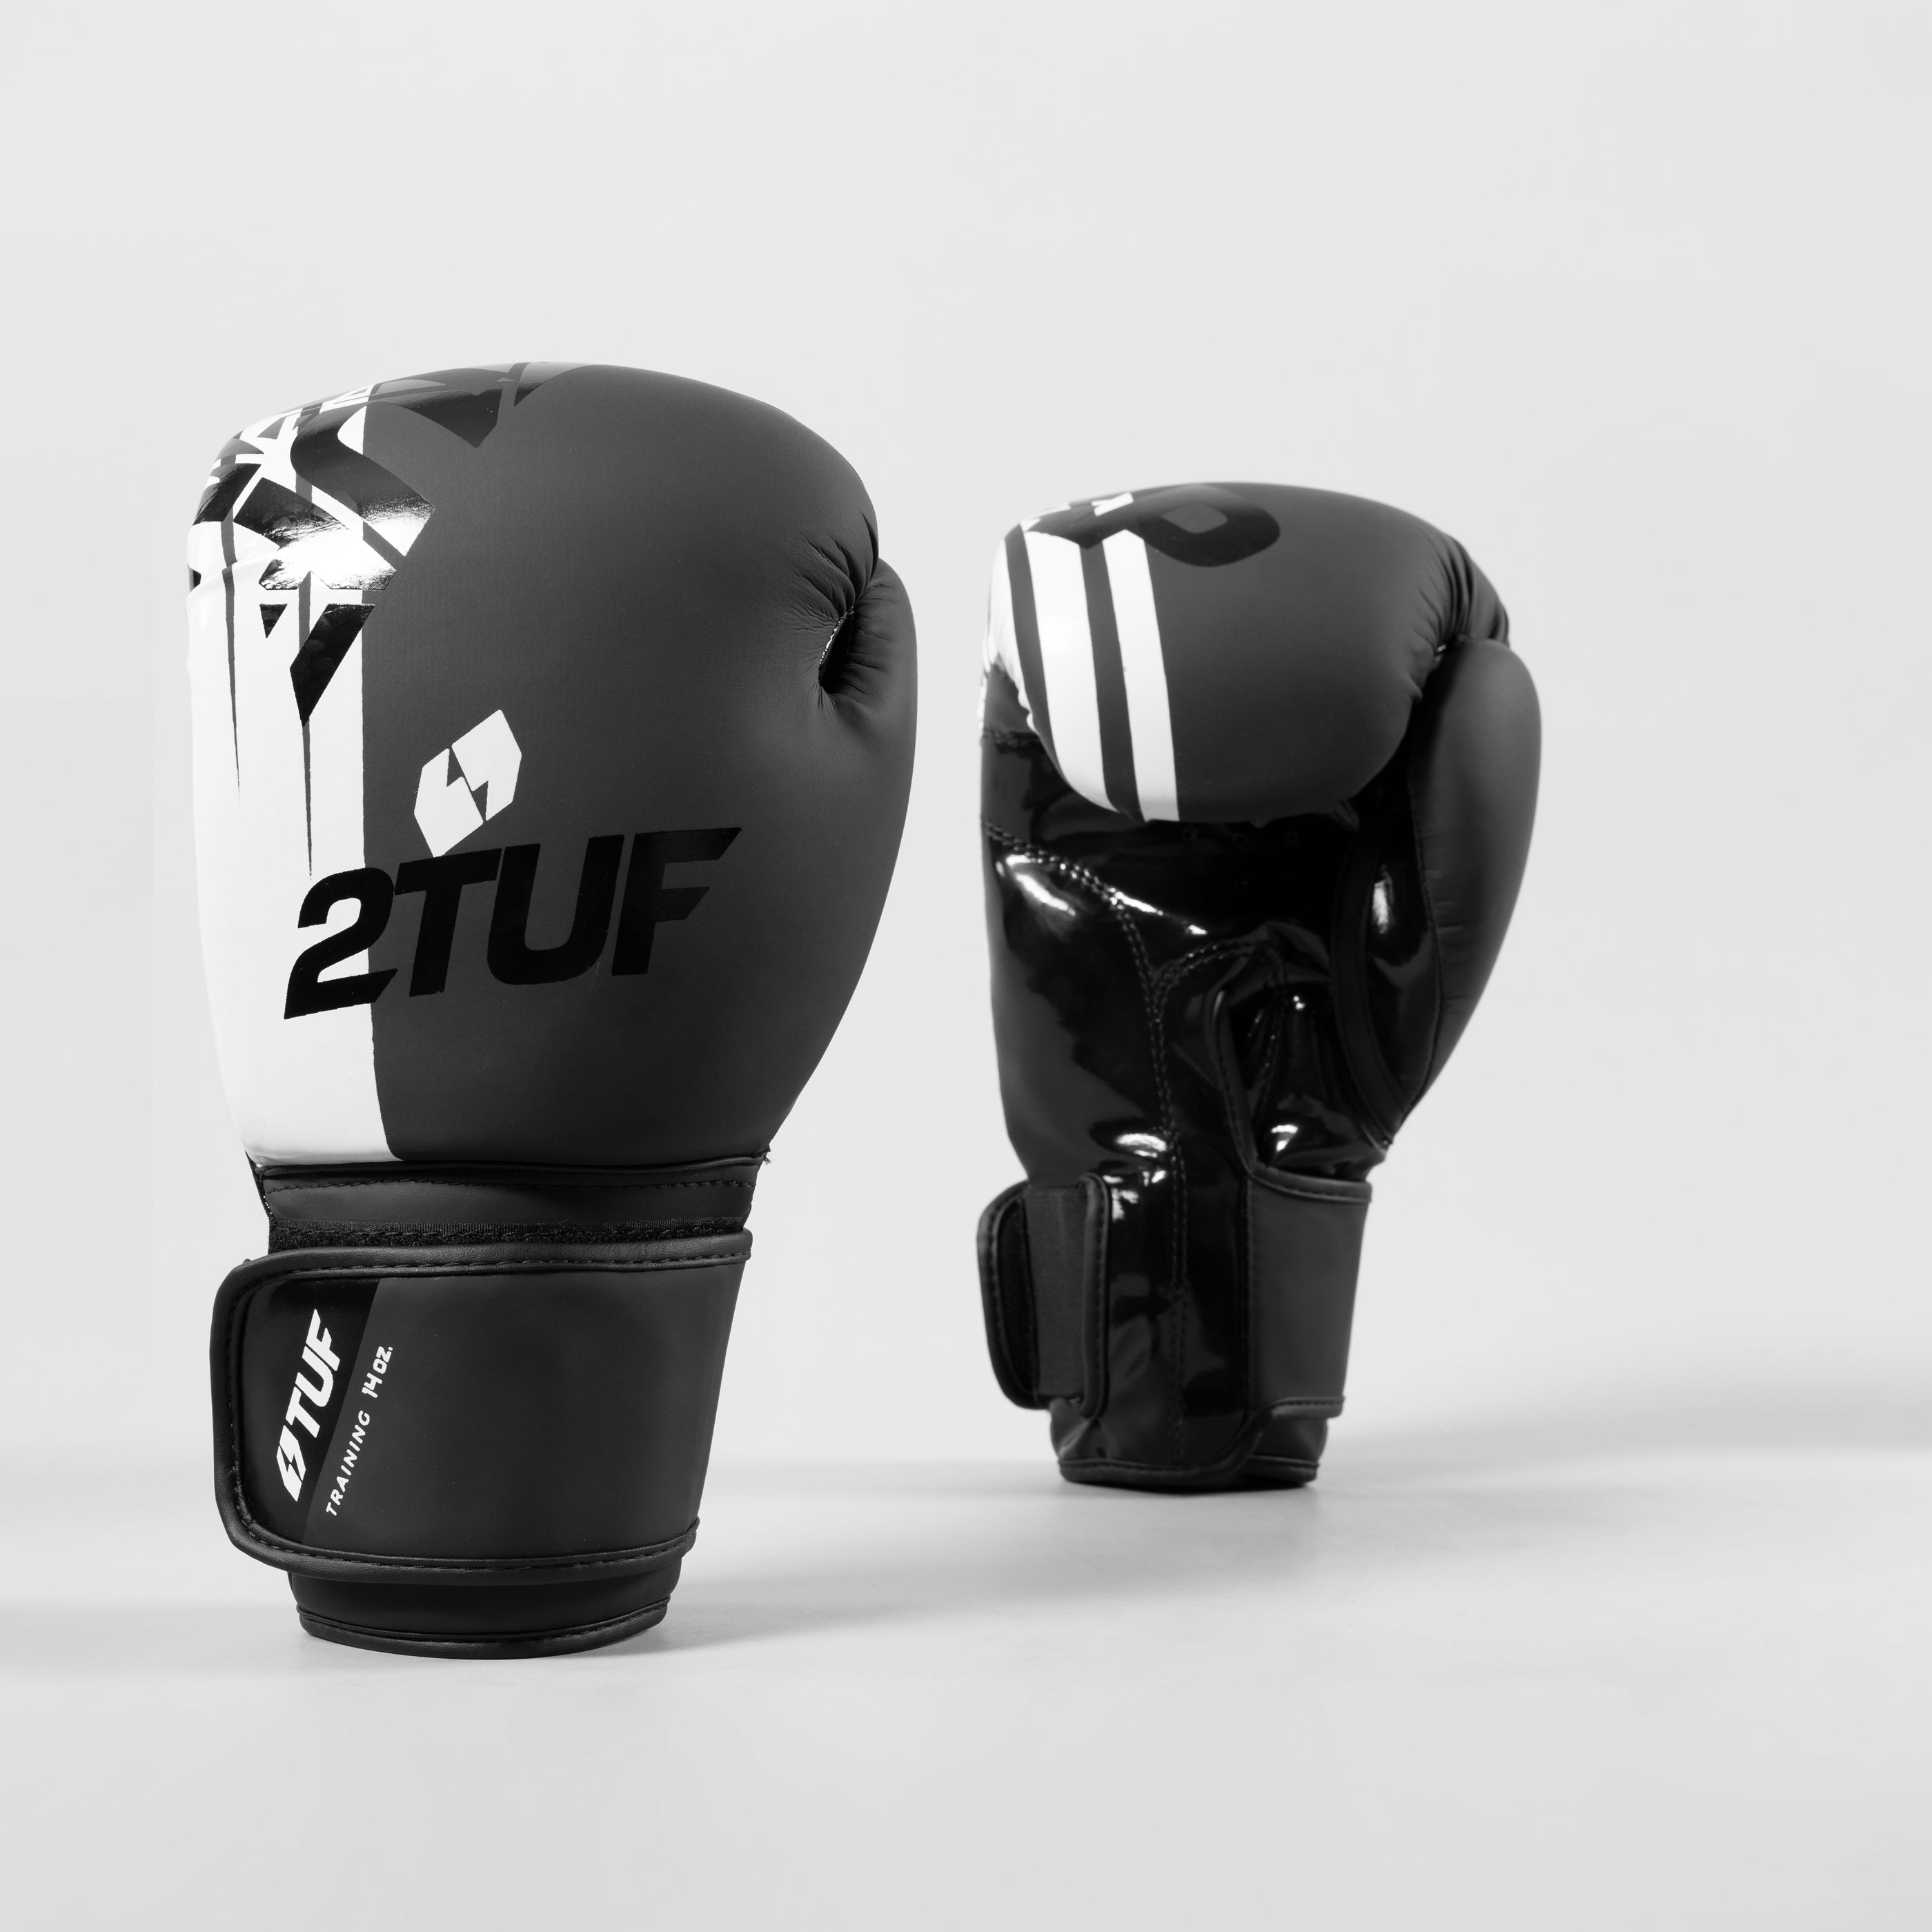 'Tuff' Boxing Gloves - Black/White 2TUF2TAP